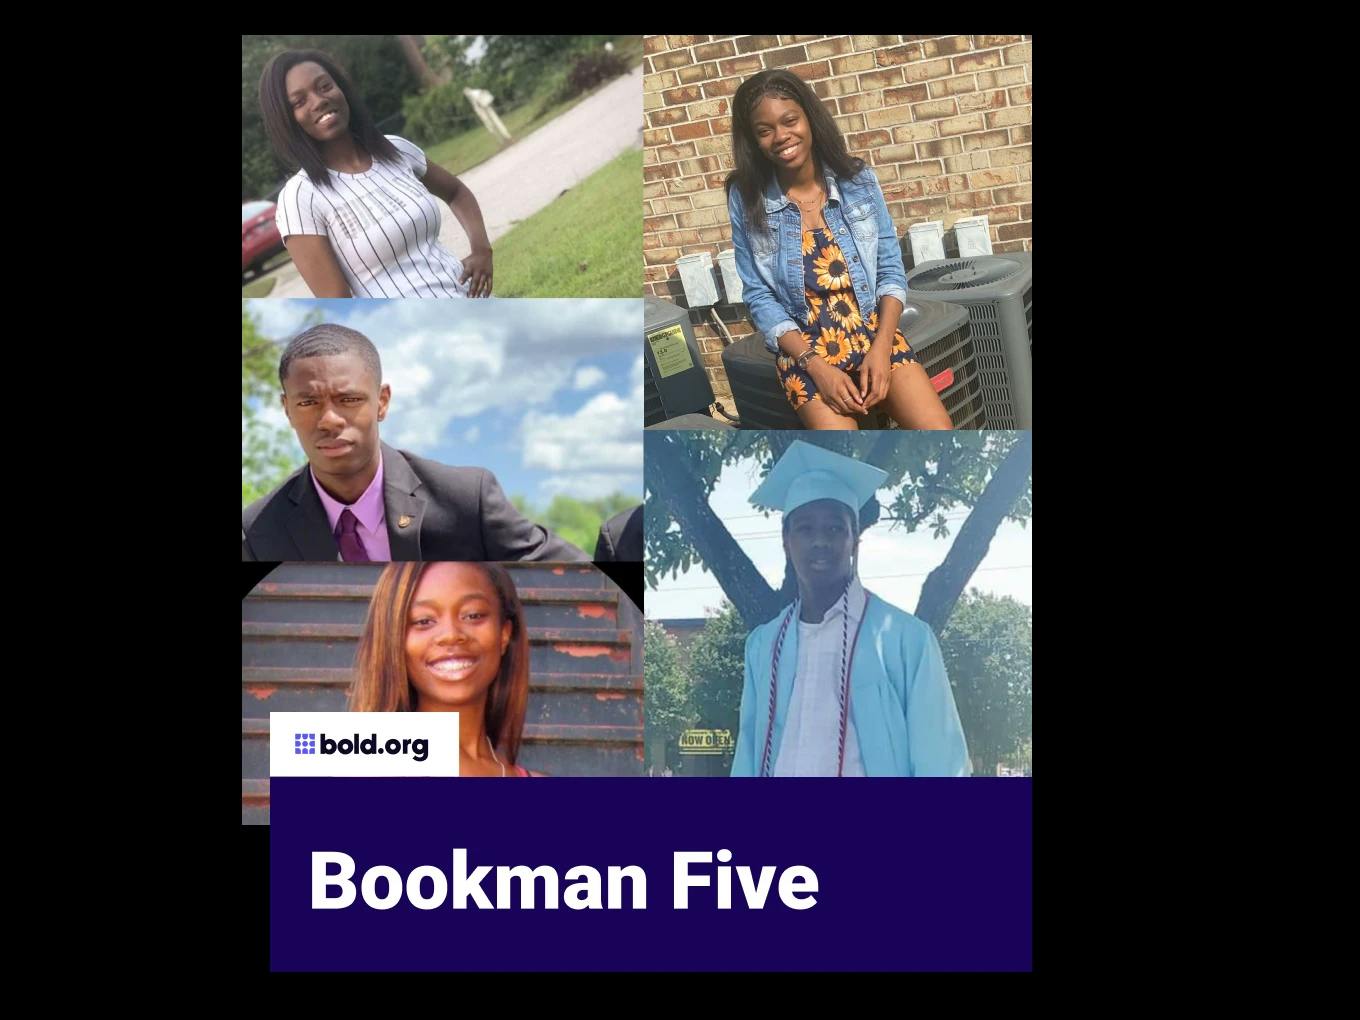 Bookman 5 Scholarship